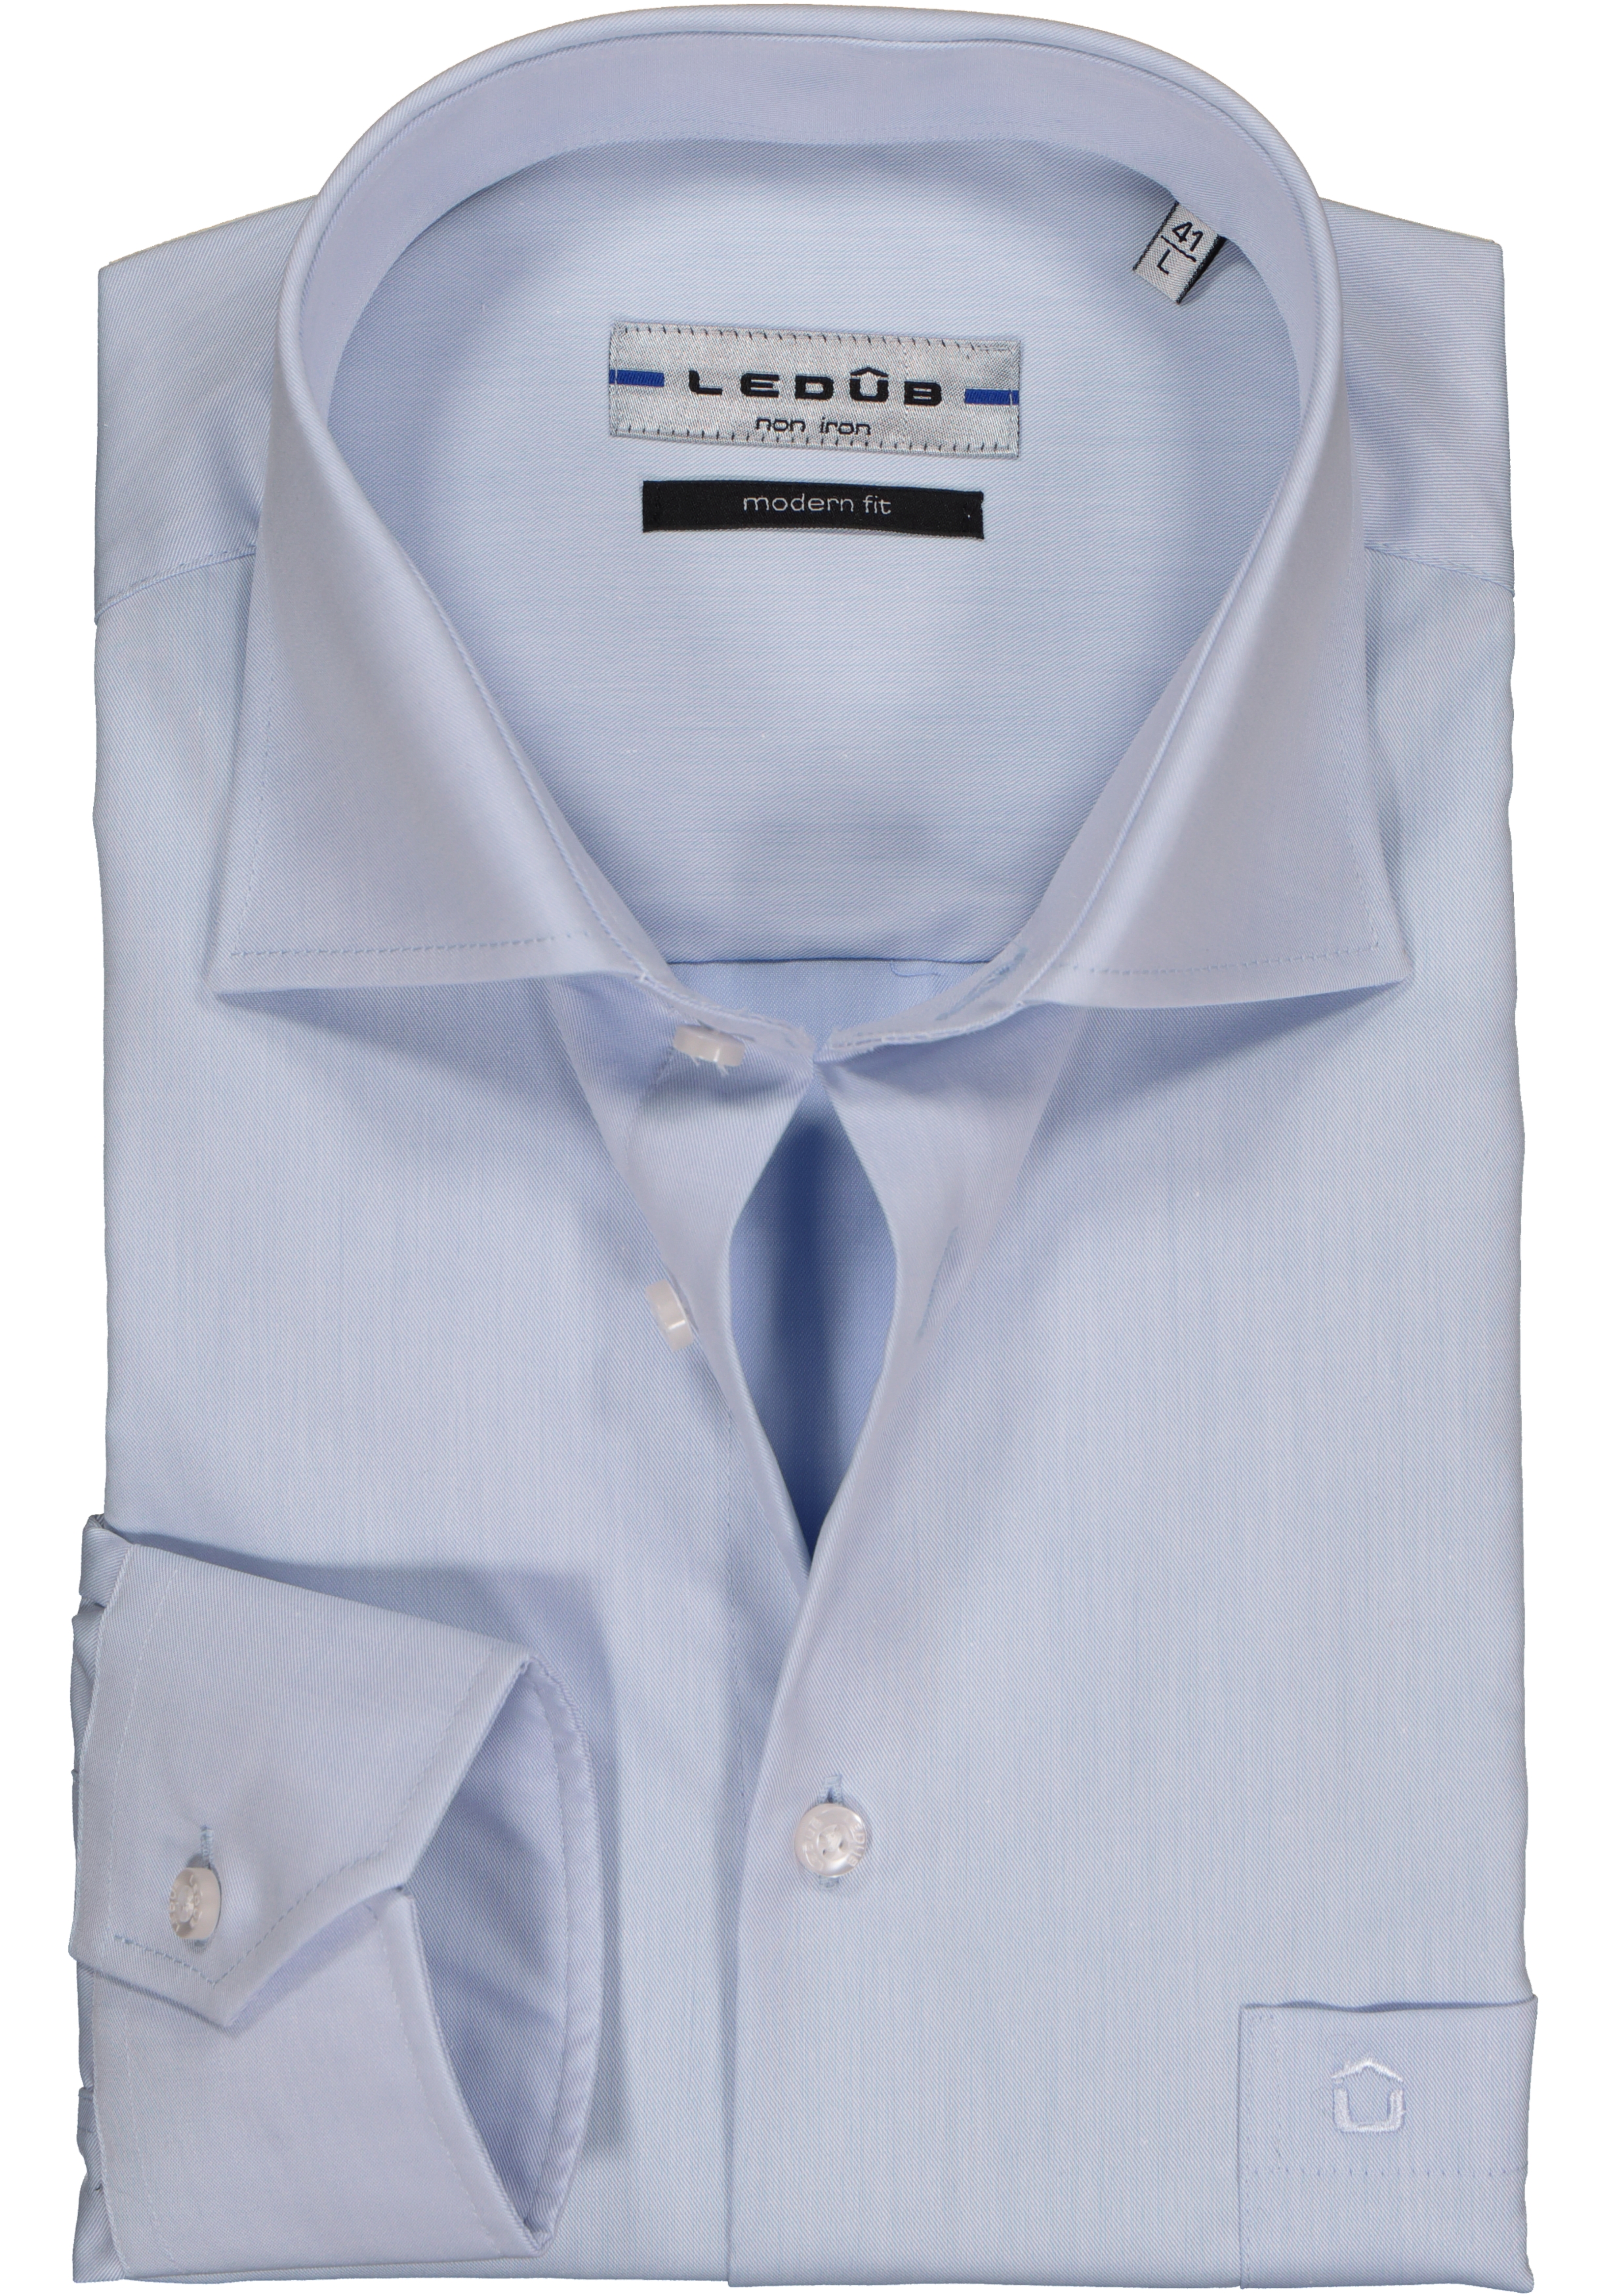 kool beet koppeling Ledub modern fit overhemd, mouwlengte 7, lichtblauw twill - Zomer SALE tot  50% korting